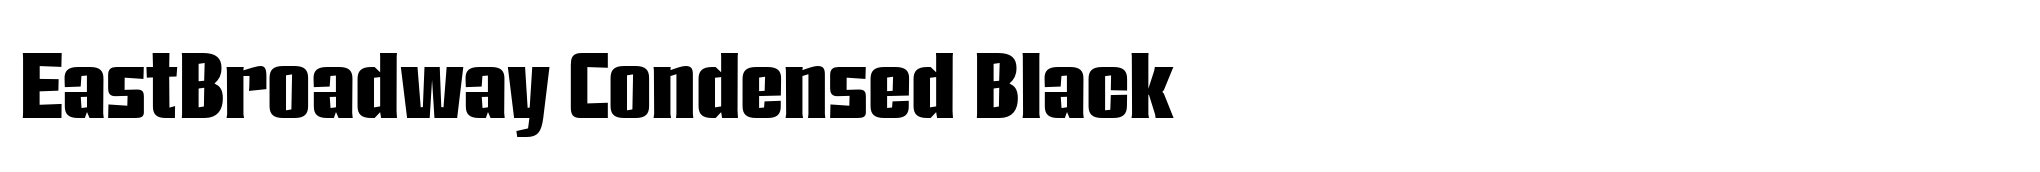 EastBroadway Condensed Black image